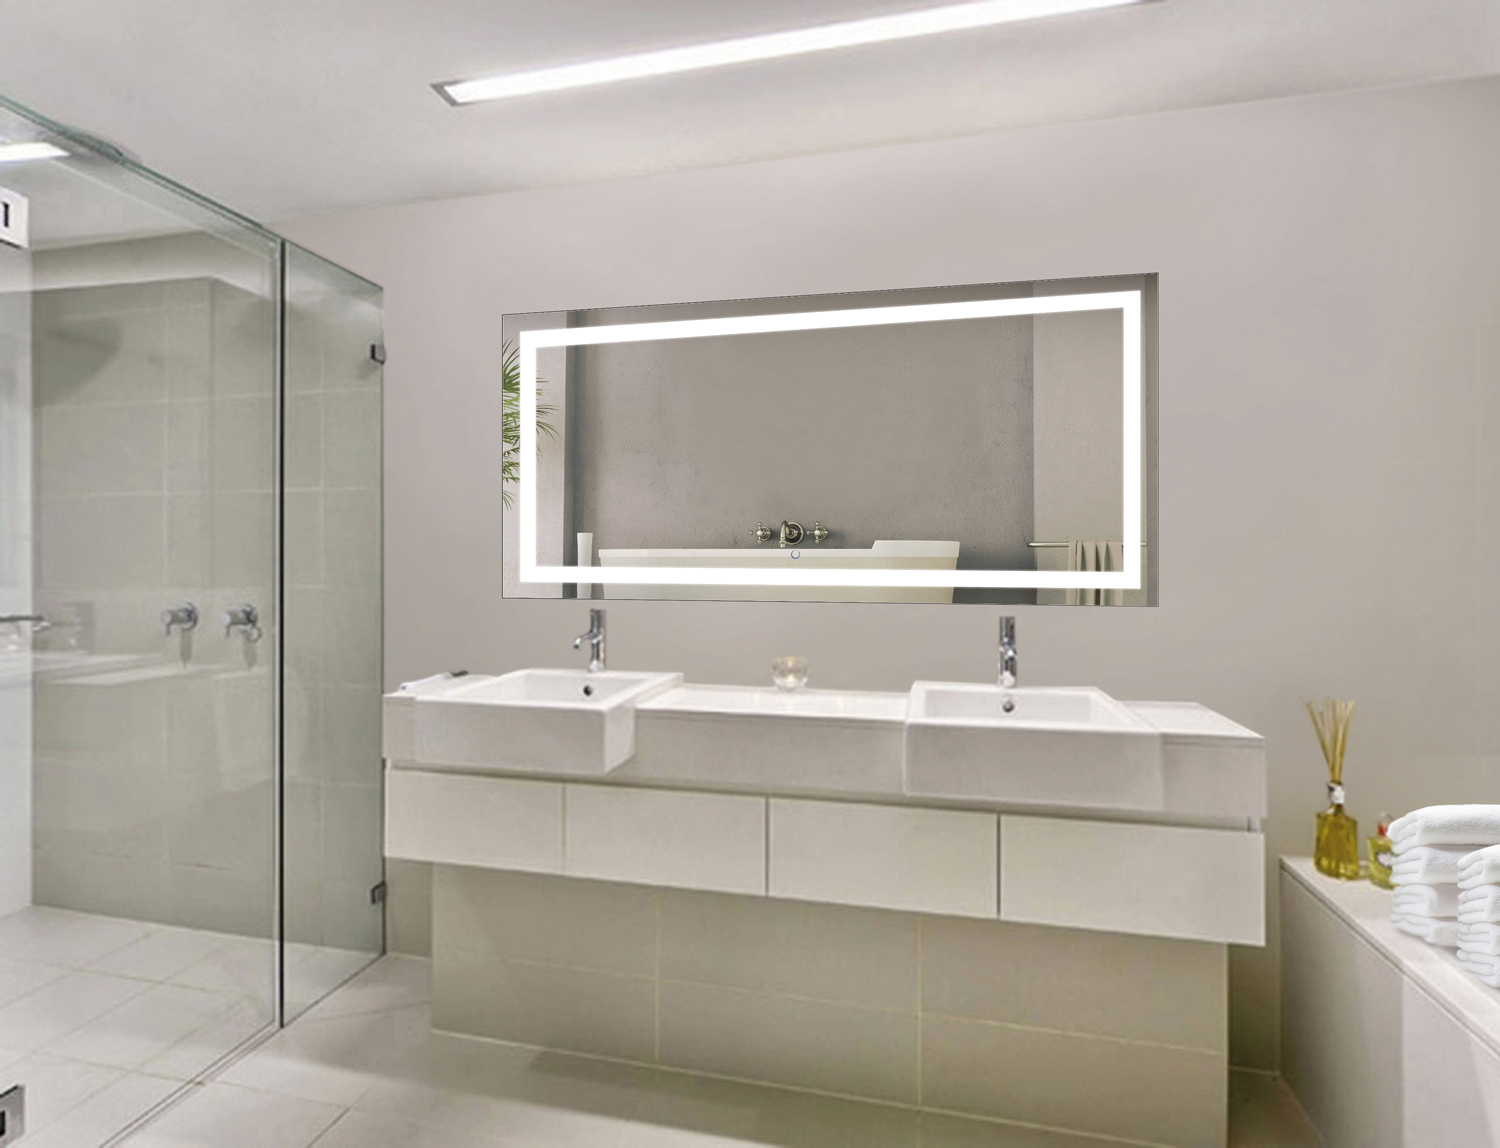 30 X 30 Bathroom Vanity Mirror